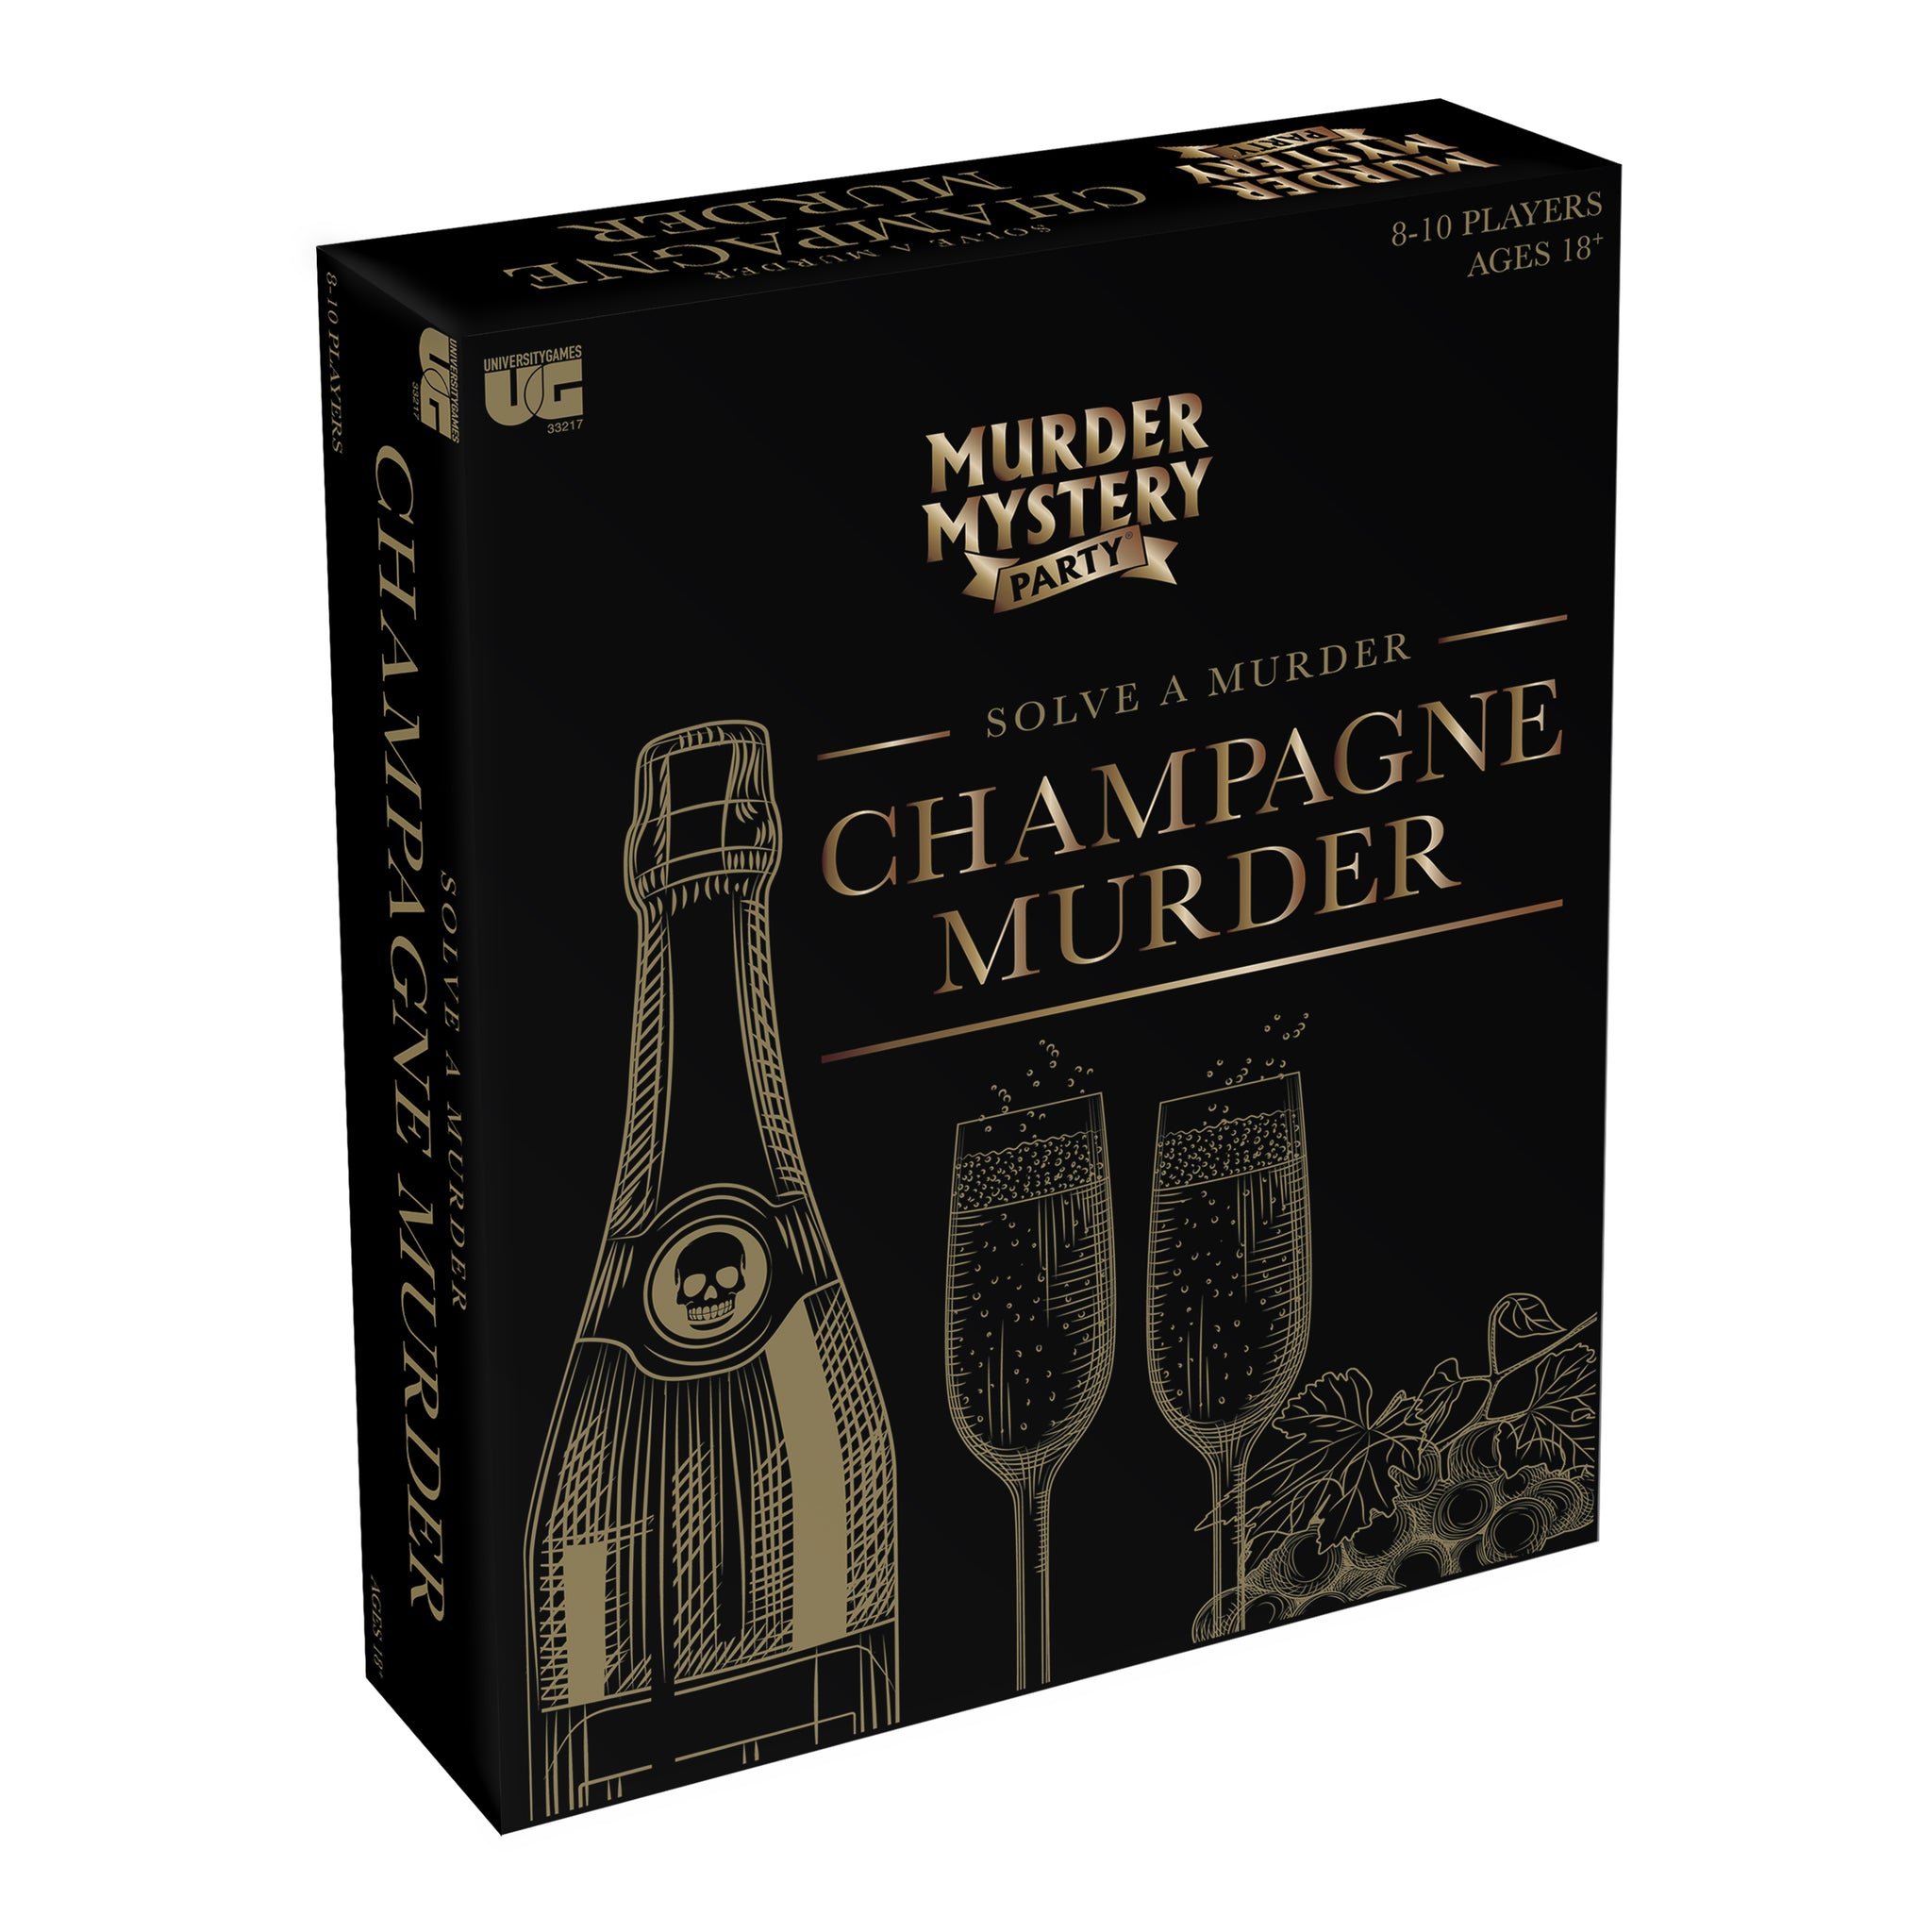 The Champagne Murder